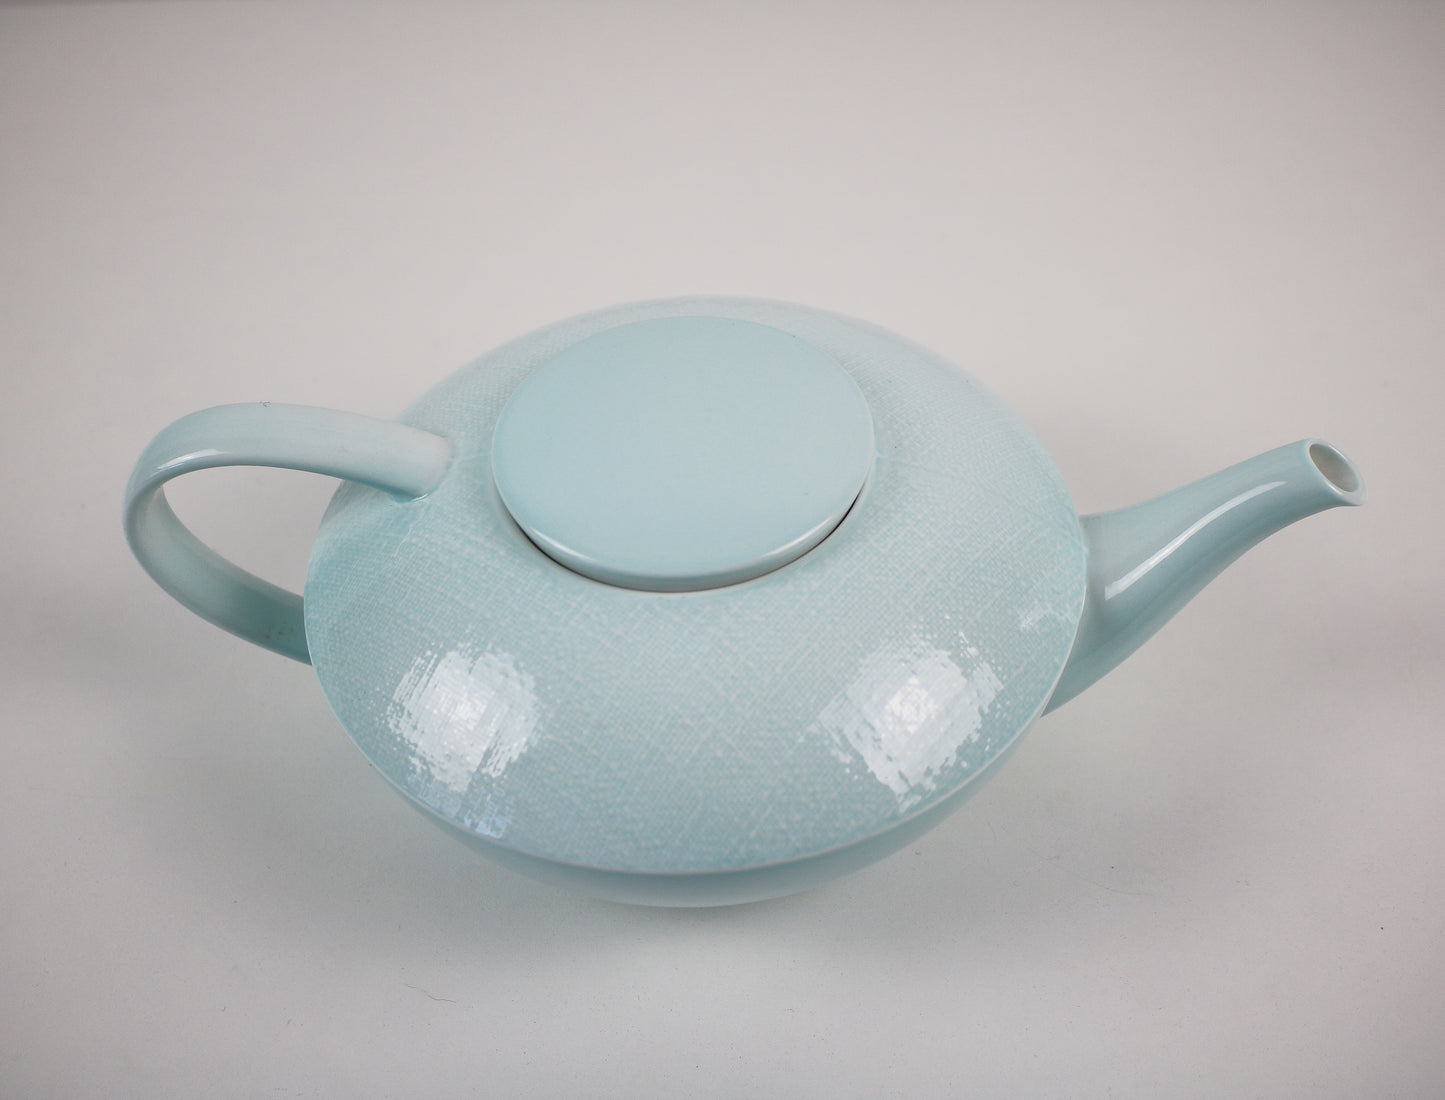 Noir Aqua tea serving set by Villeroy & Boch - retired design early 21st century